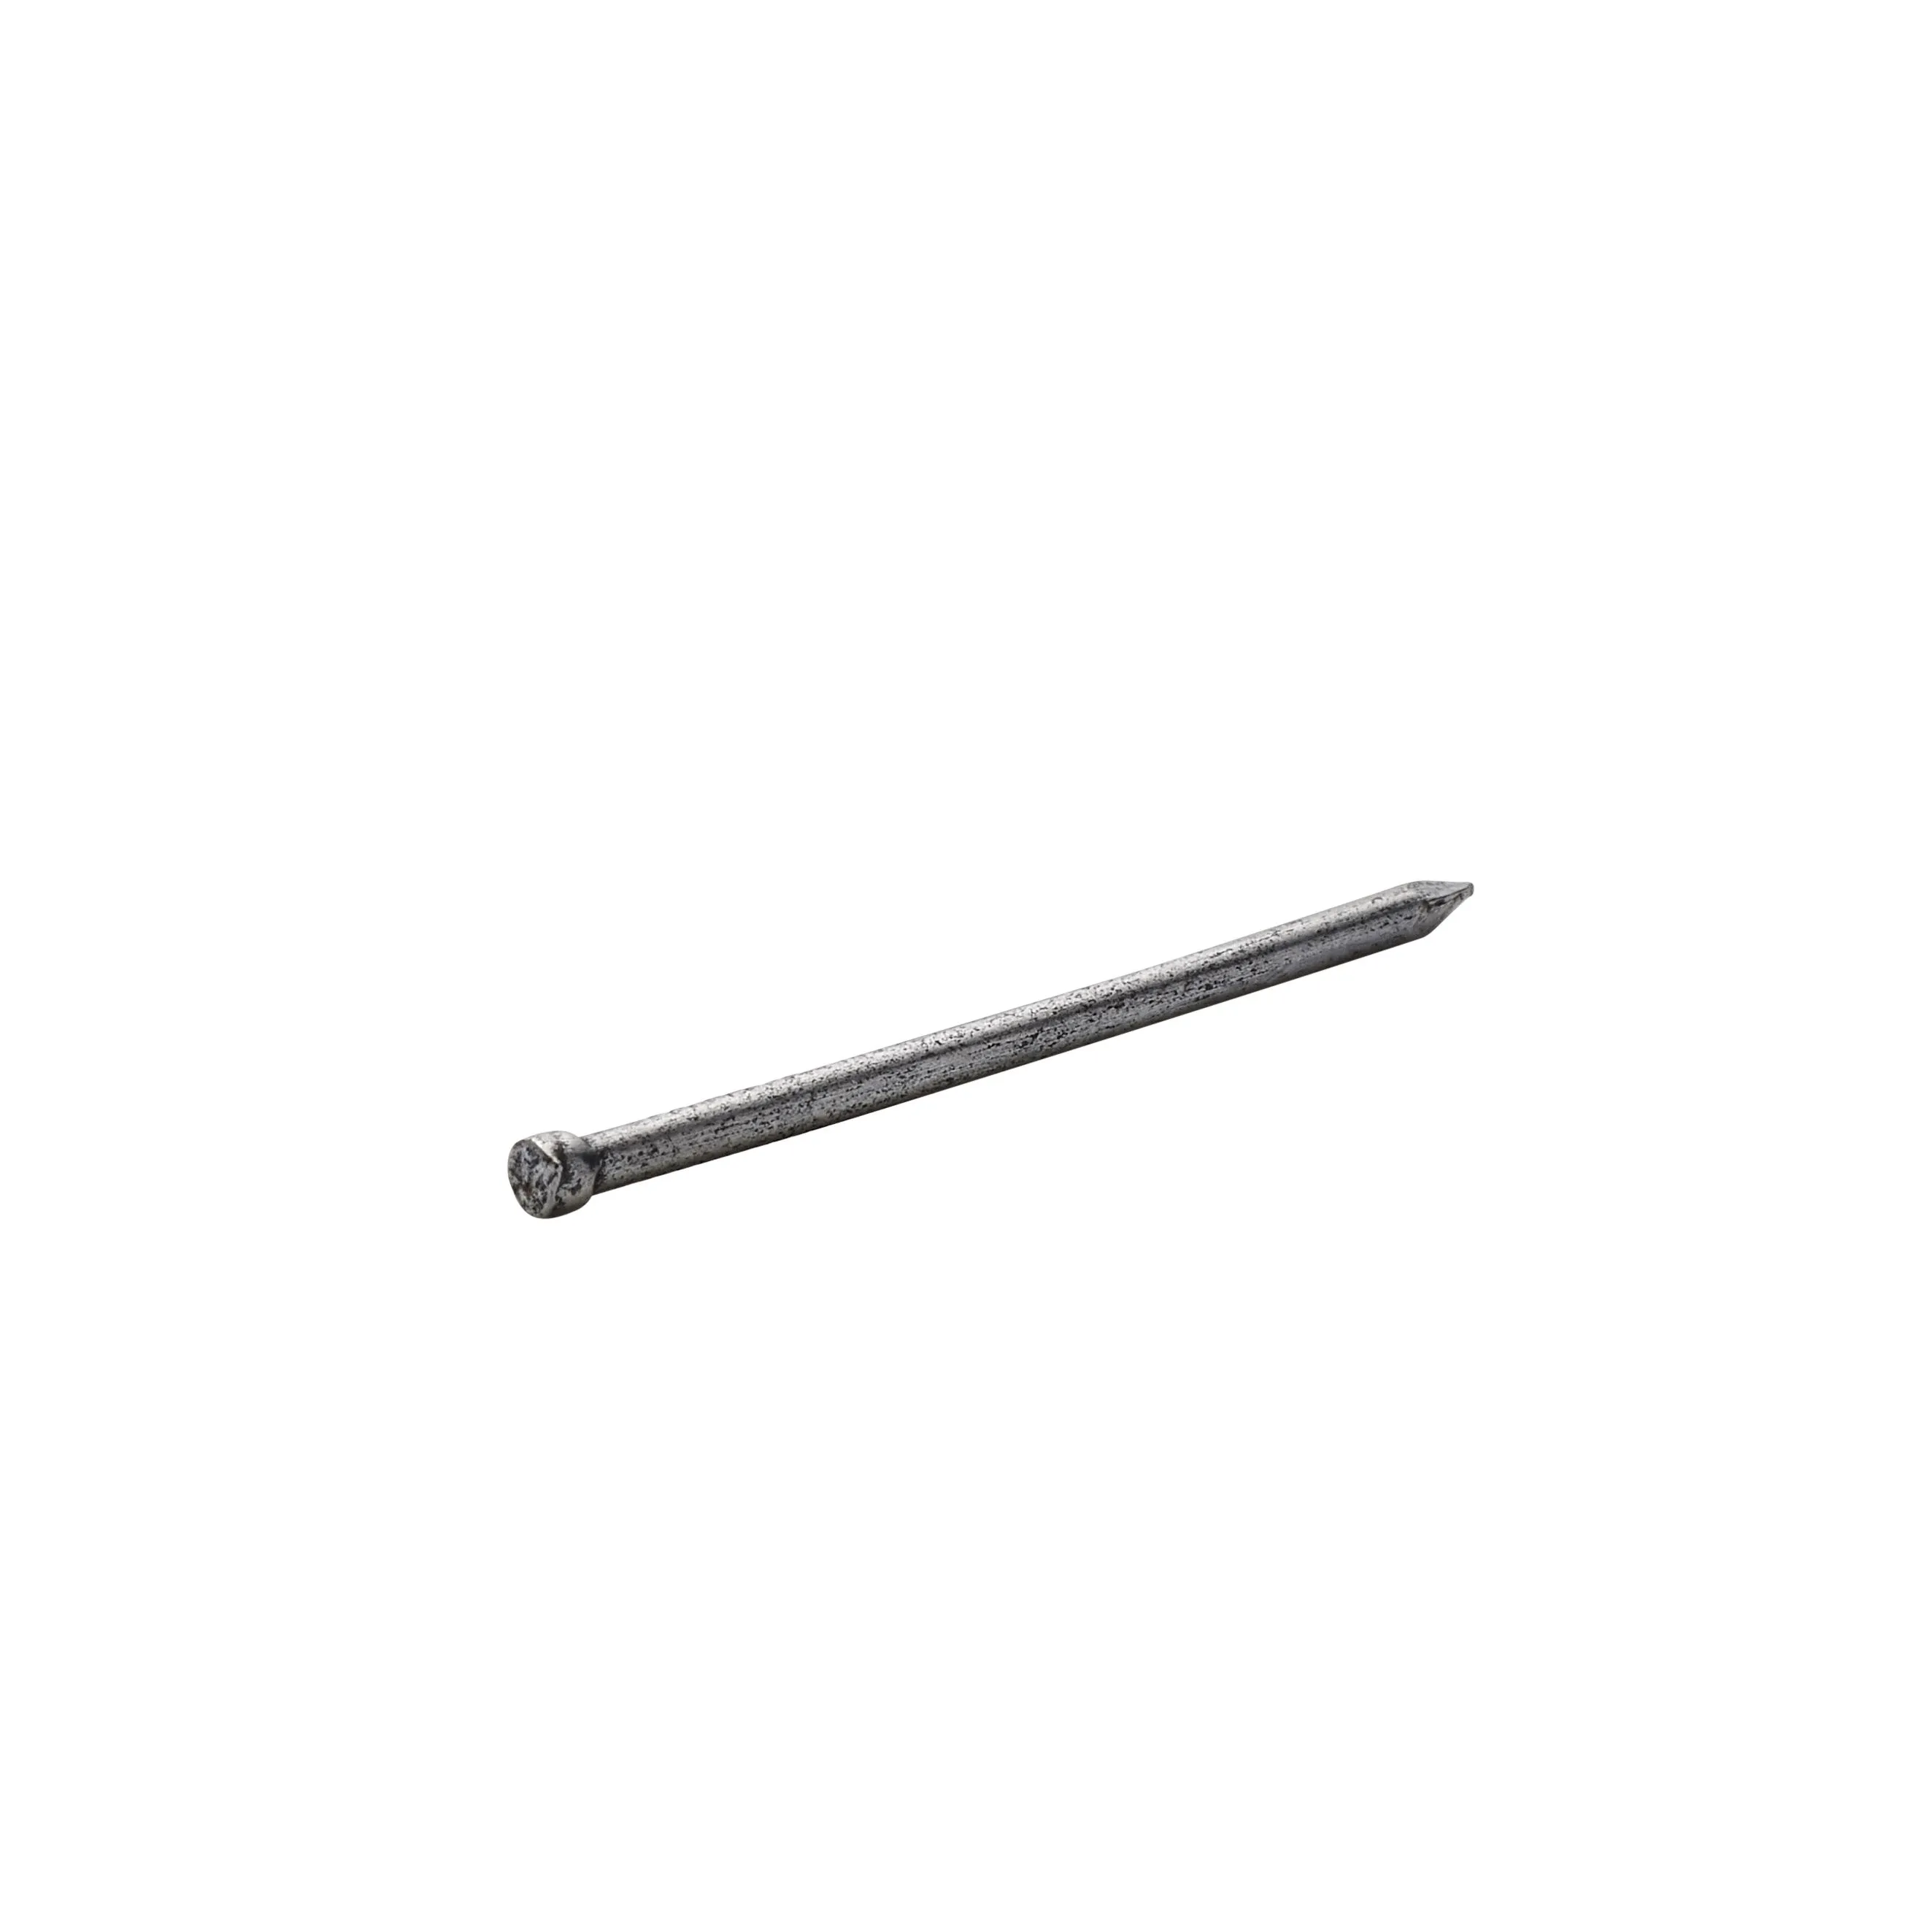 Diall Lost head nail (L)25mm (Dia)1.25mm, Pack